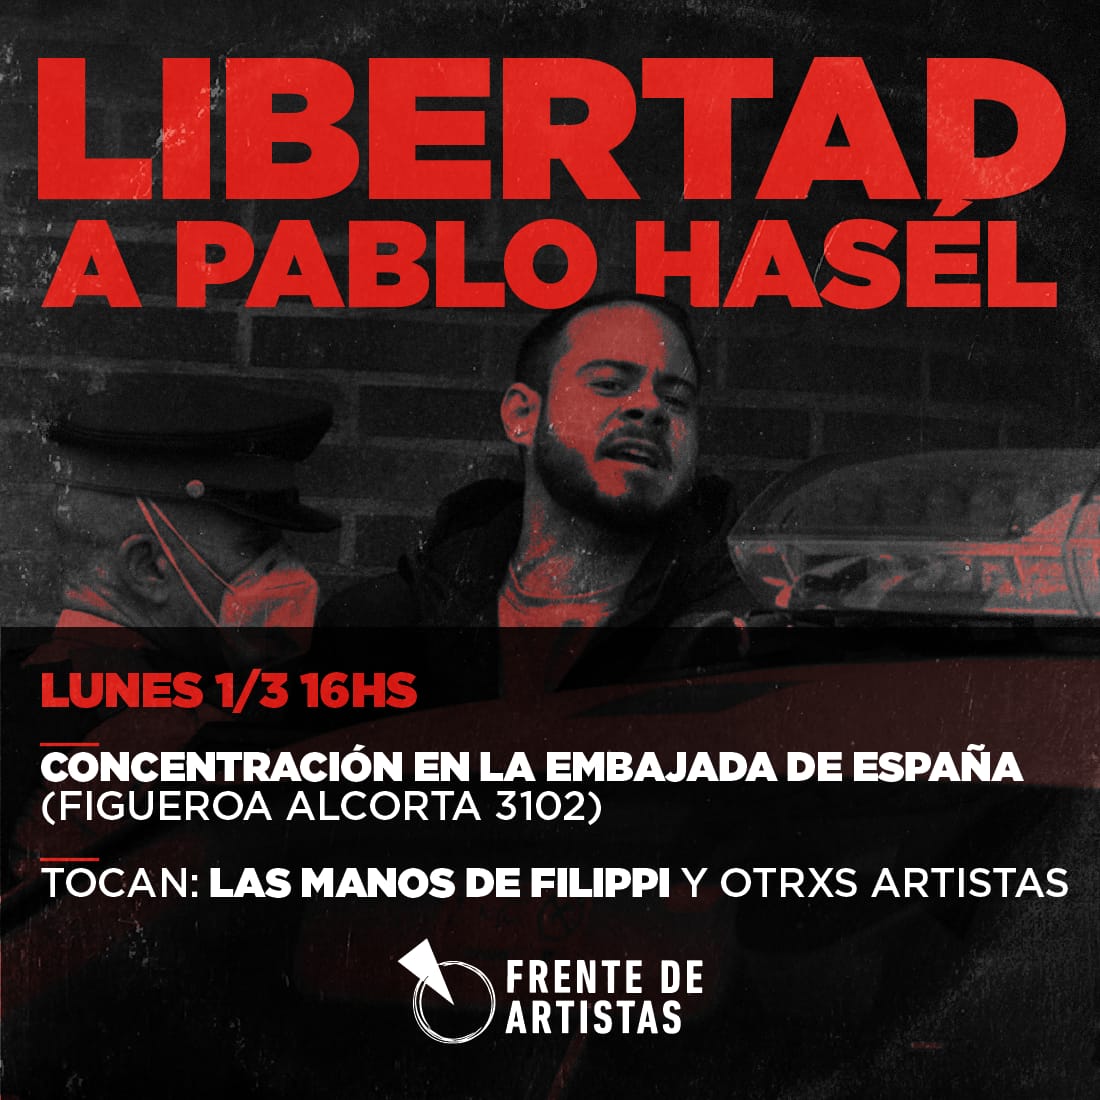 Músicxs Argentinxs concentran frente a la Embajada de España para reclamar la Libertad del rapero Pablo Hasél